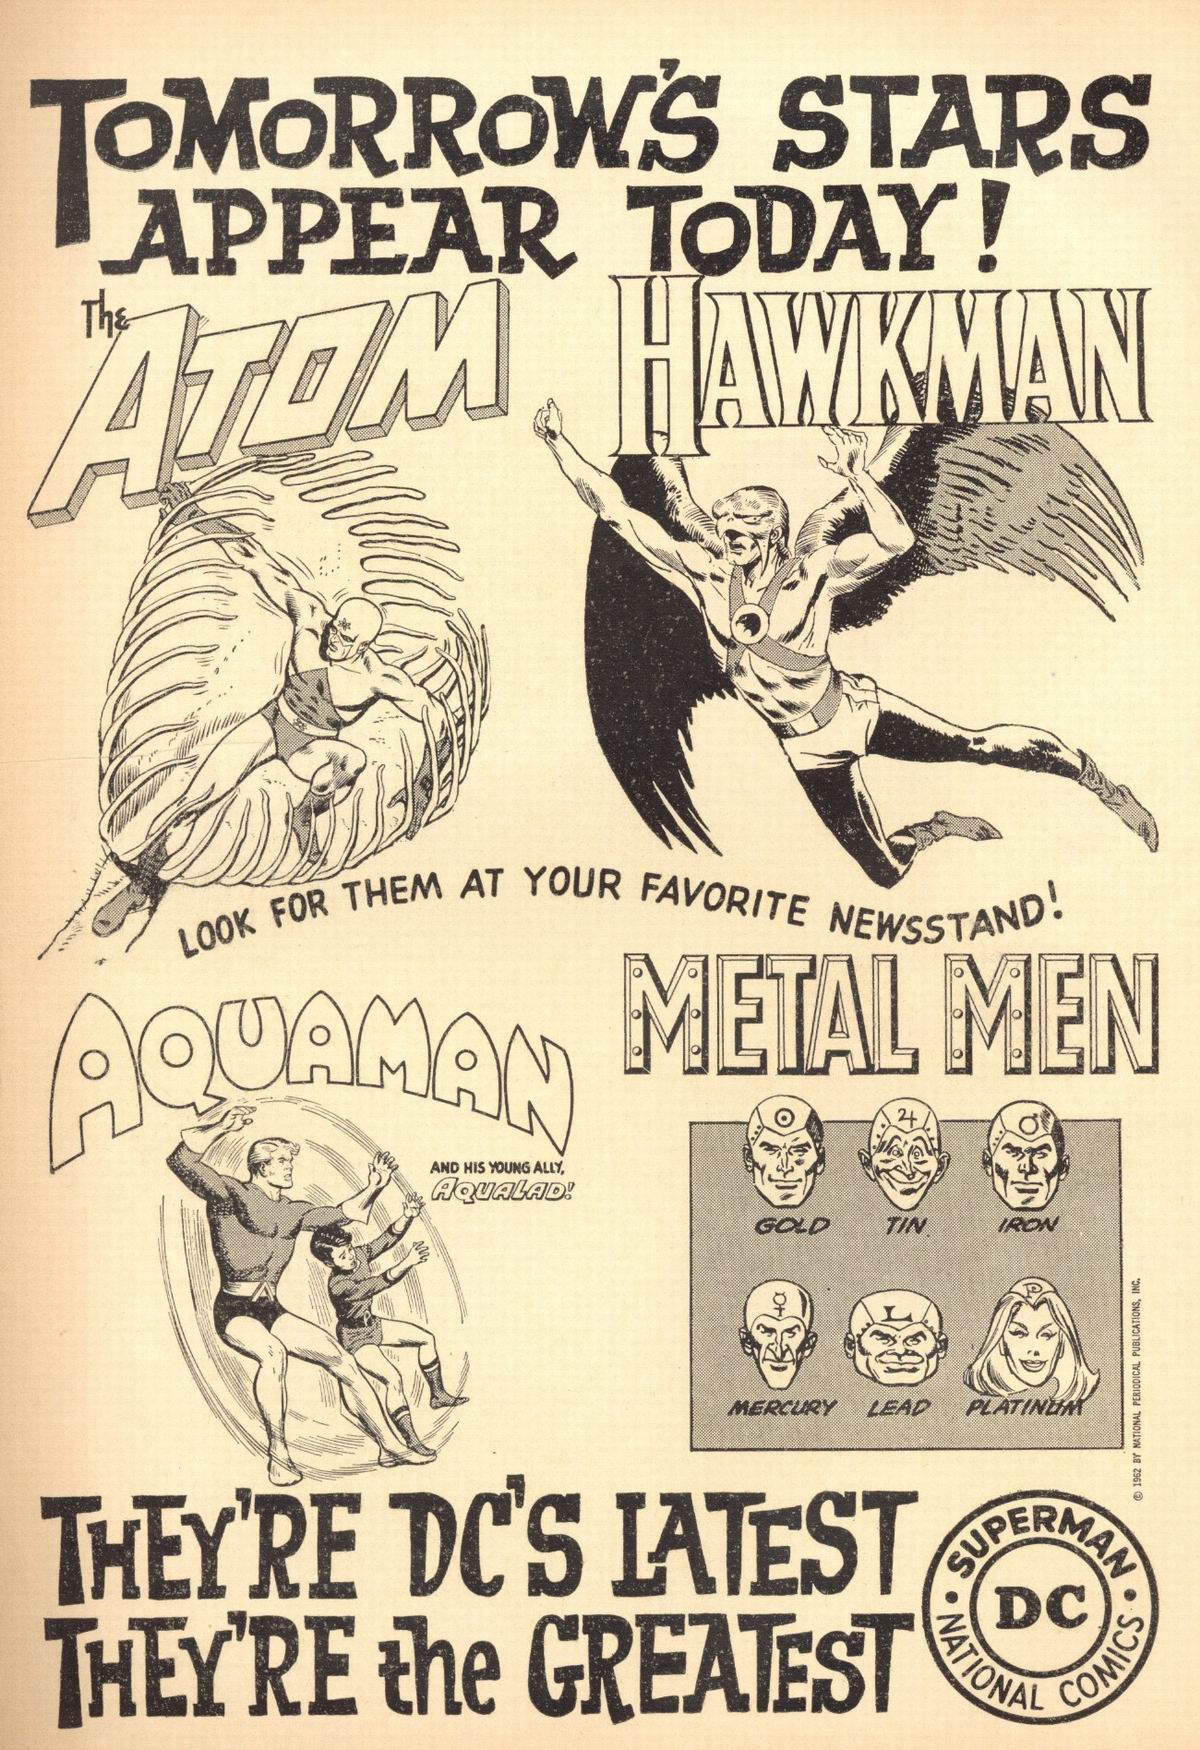 Action Comics (1938) 294 Page 1